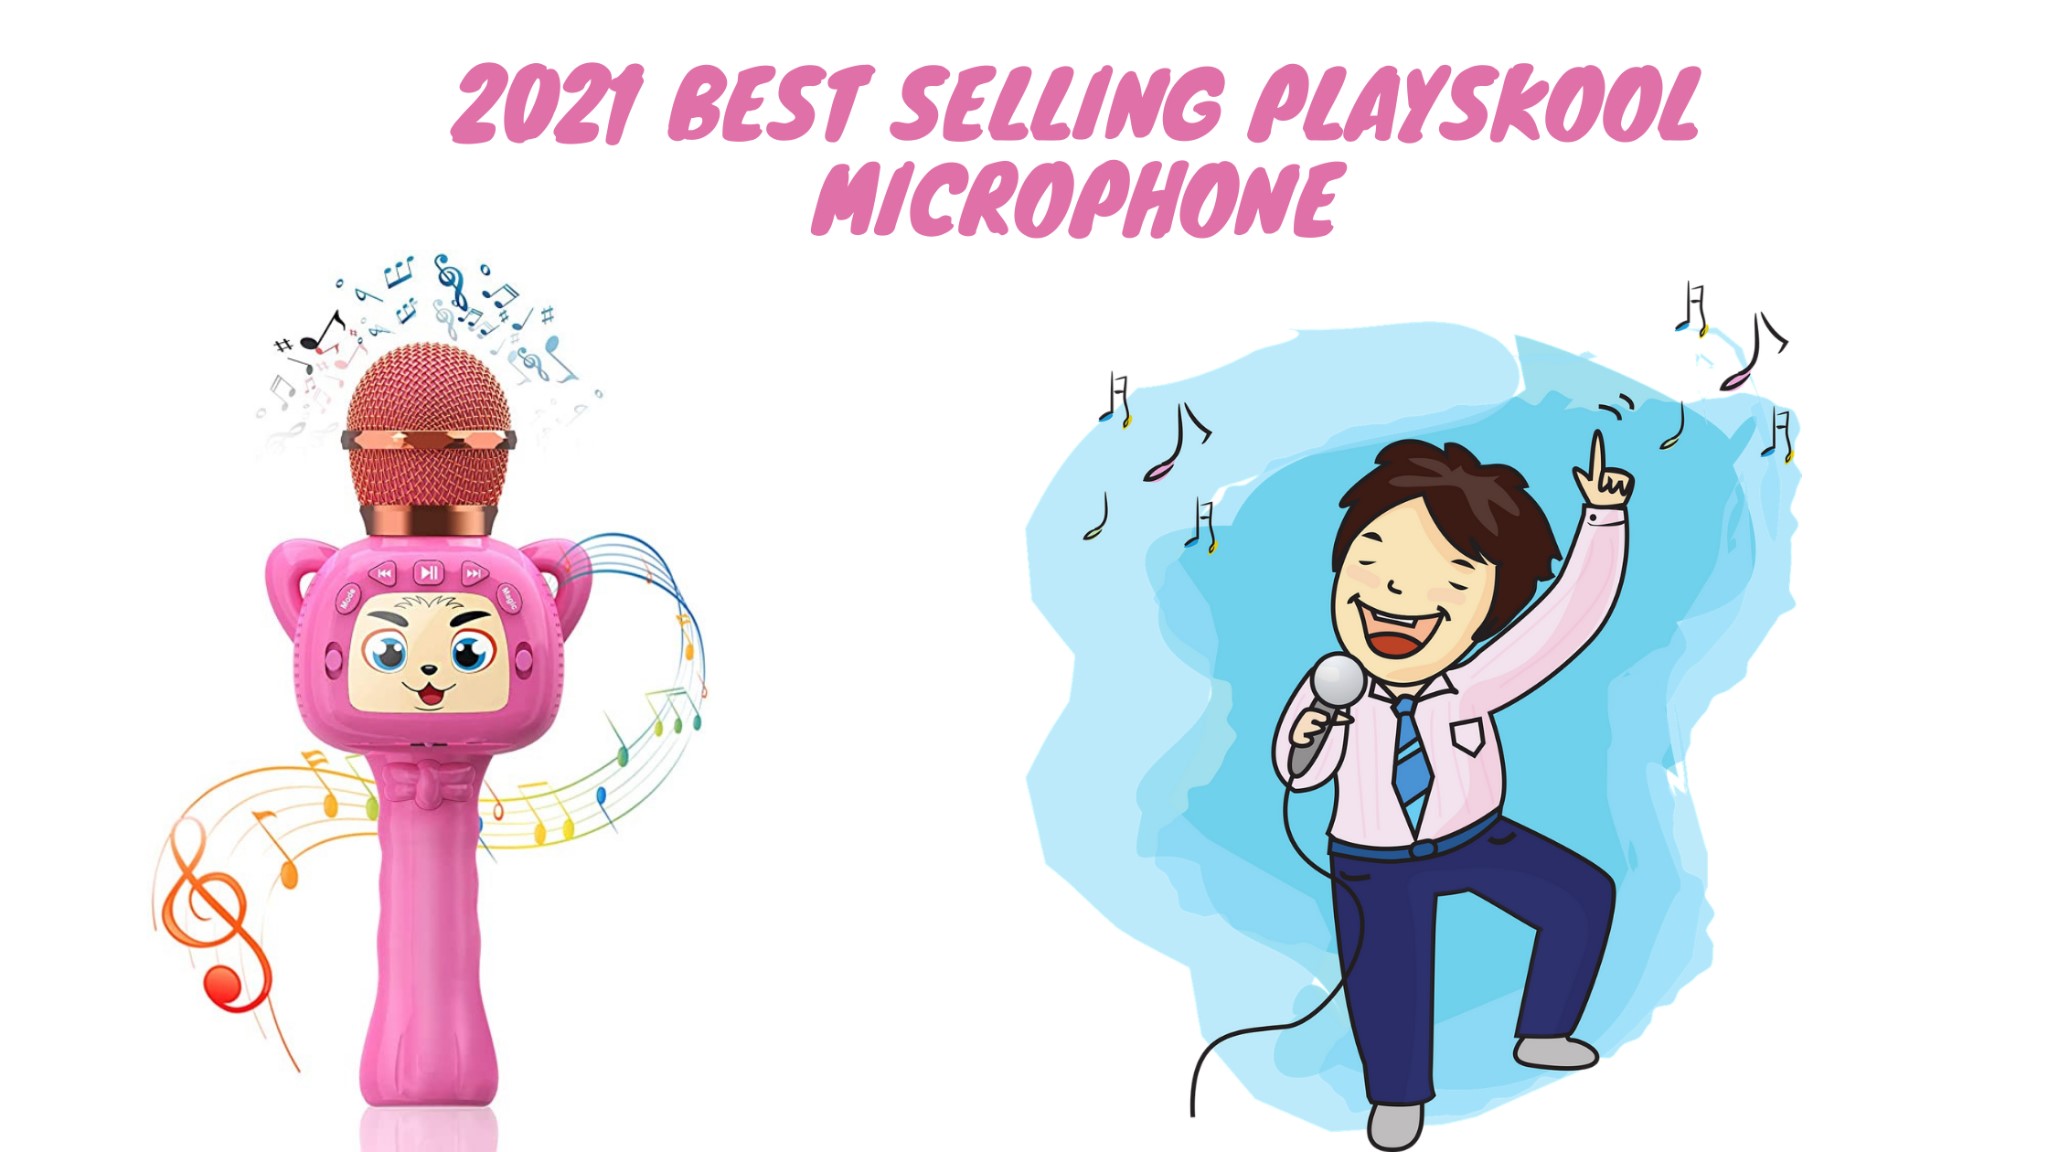 microfono playskool più venduto